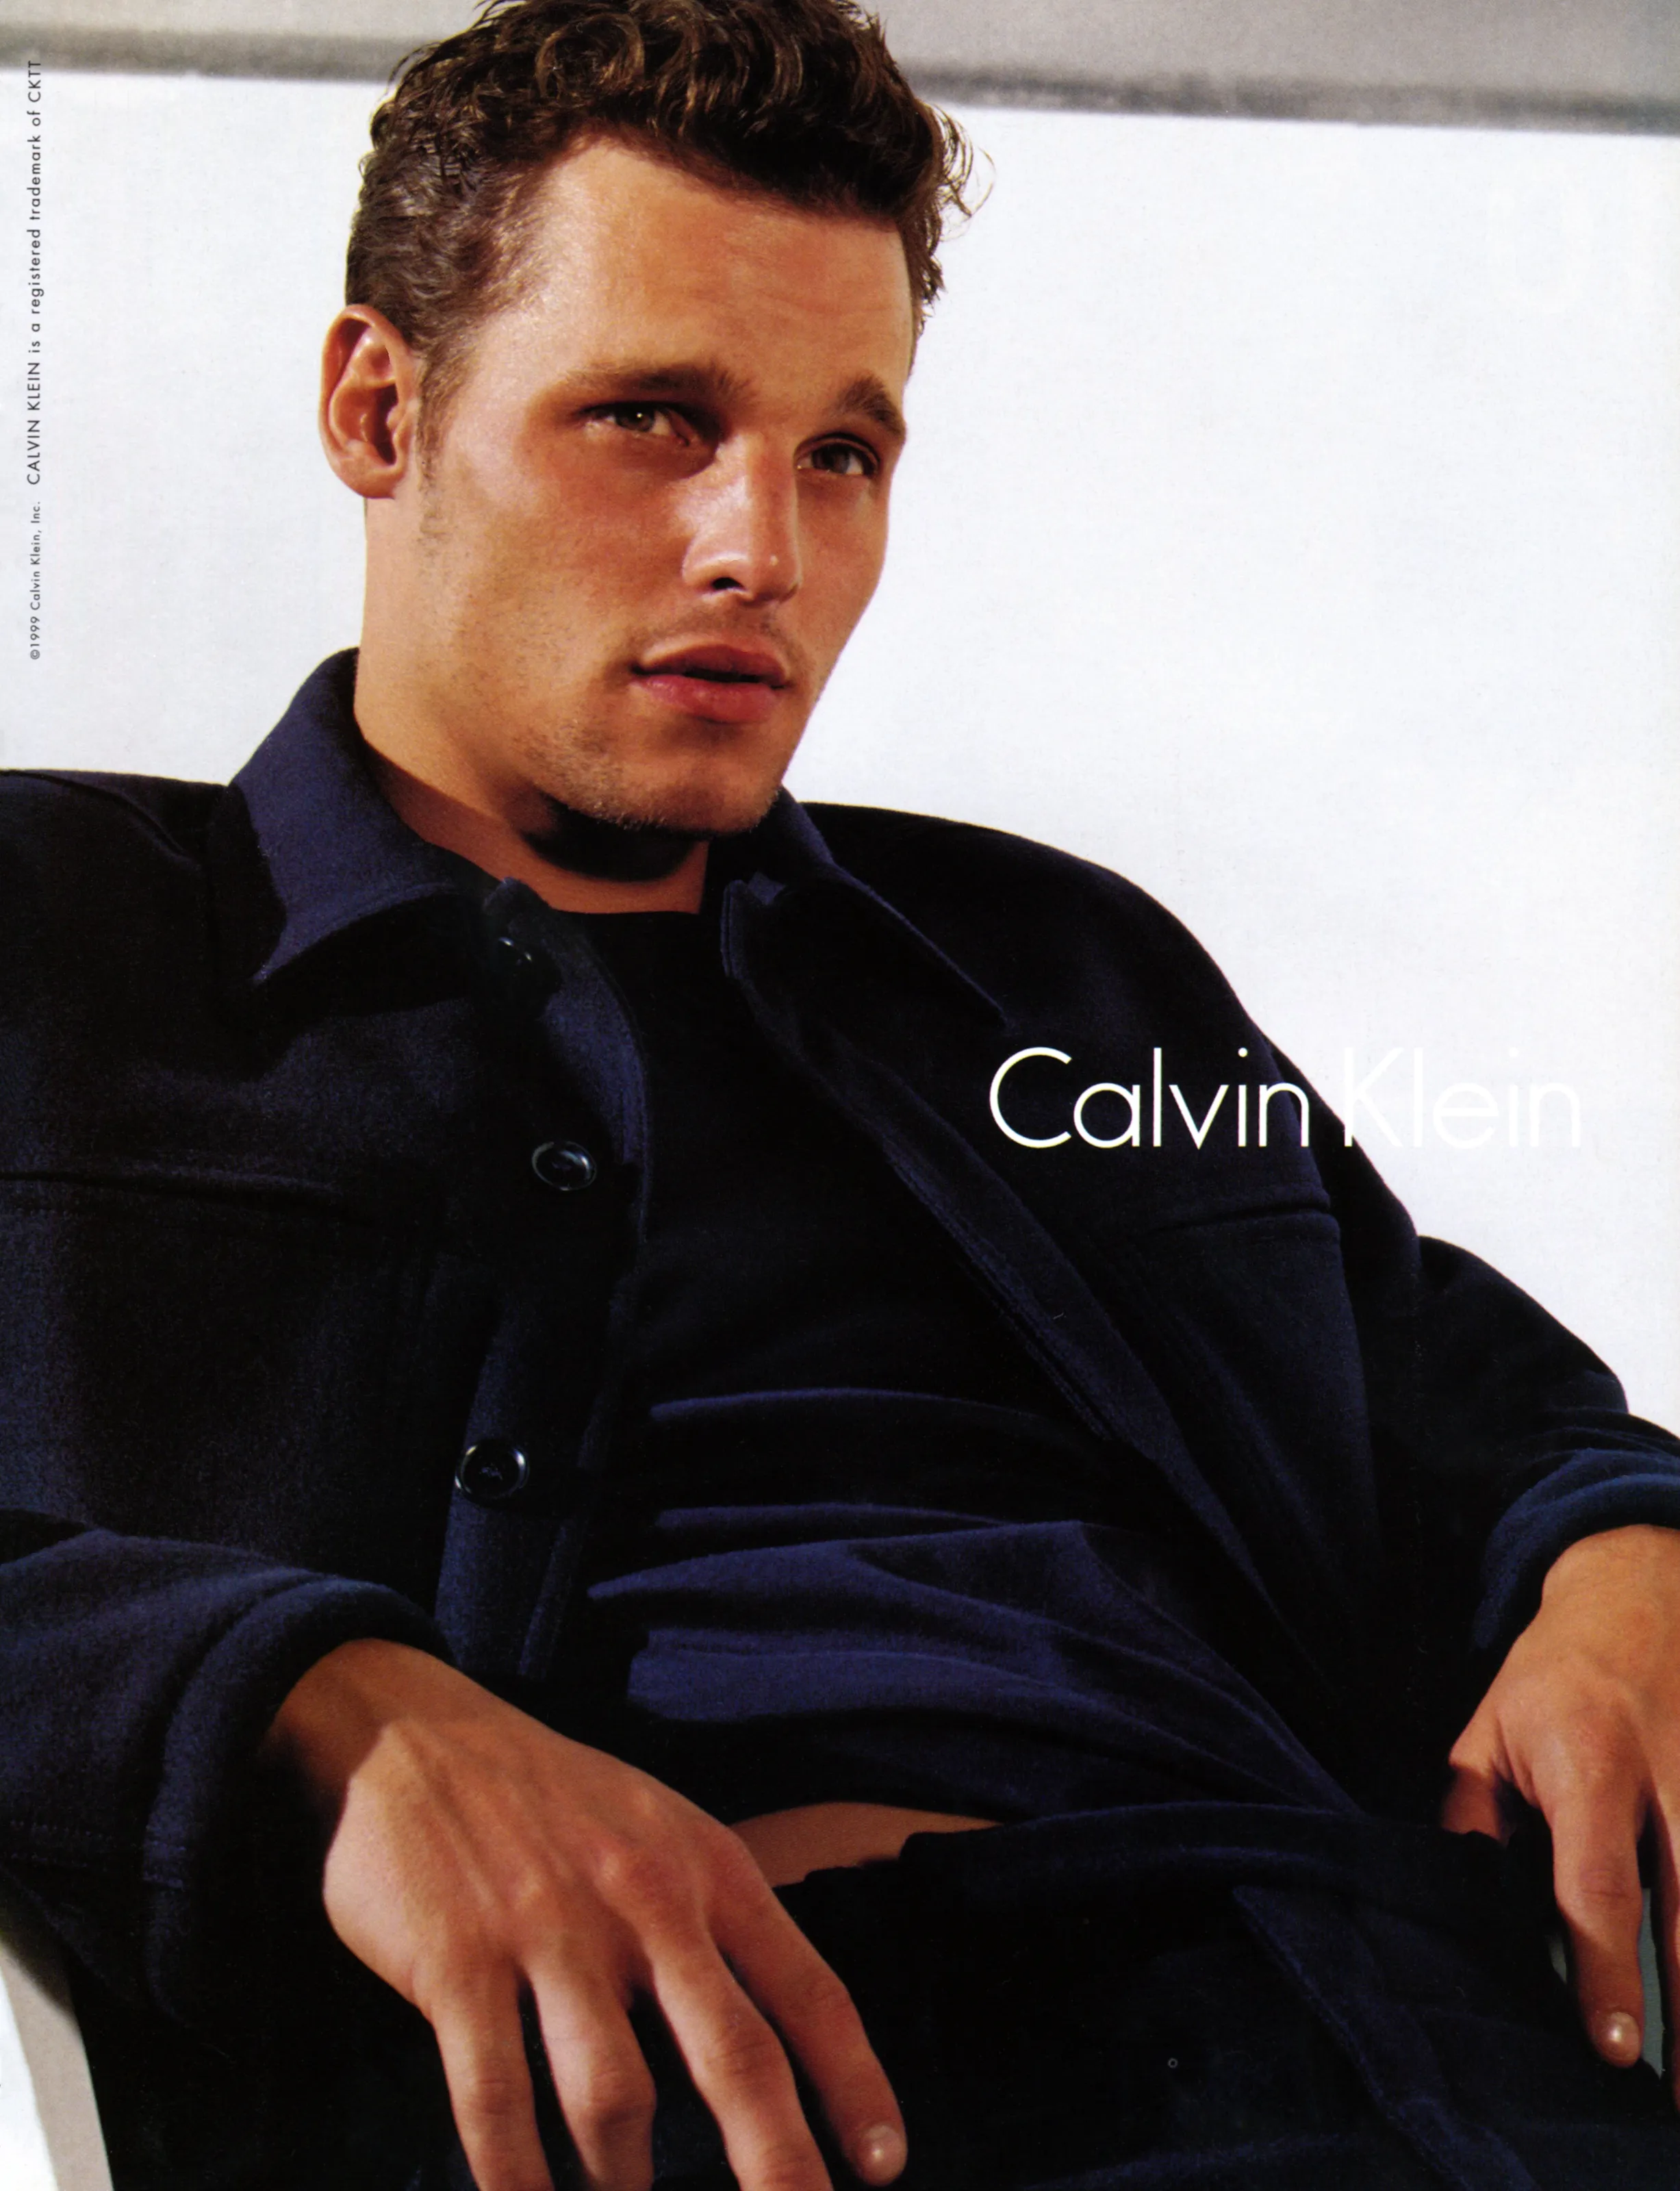 CAMPAIGN: CALVIN KLEIN MENSWEAR FW 1999